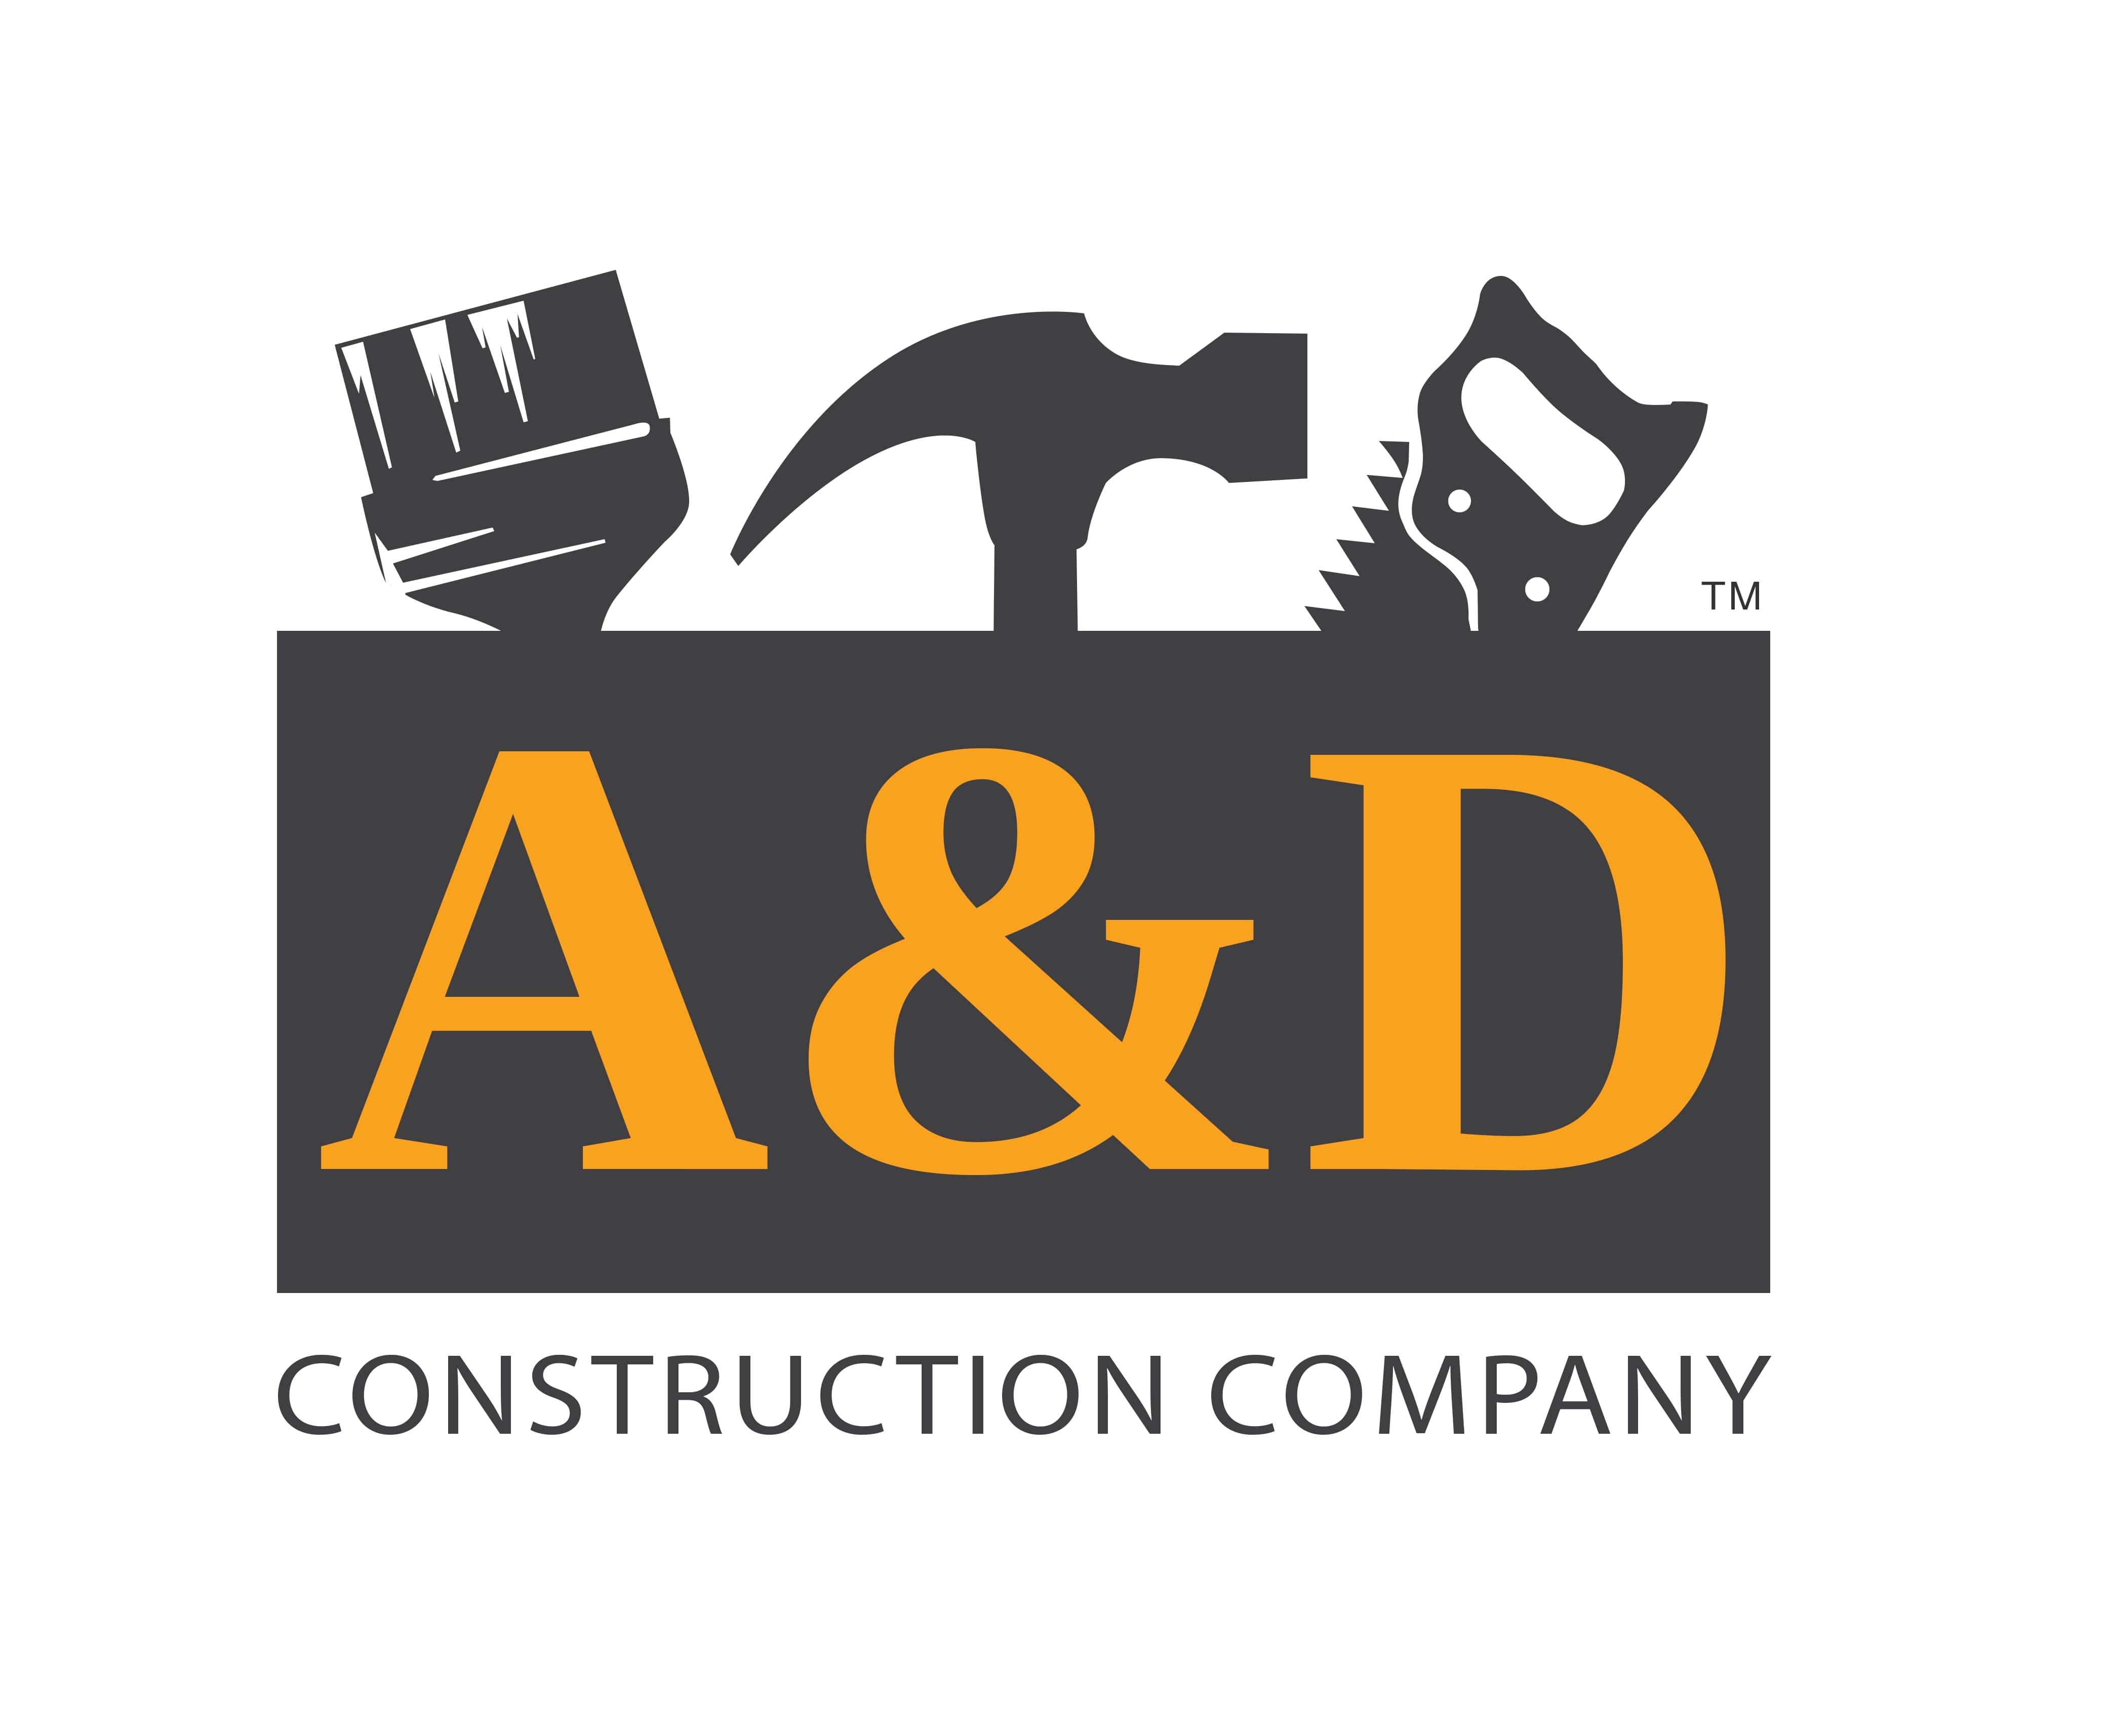 A&D Construction Company - Handyman Service in New York